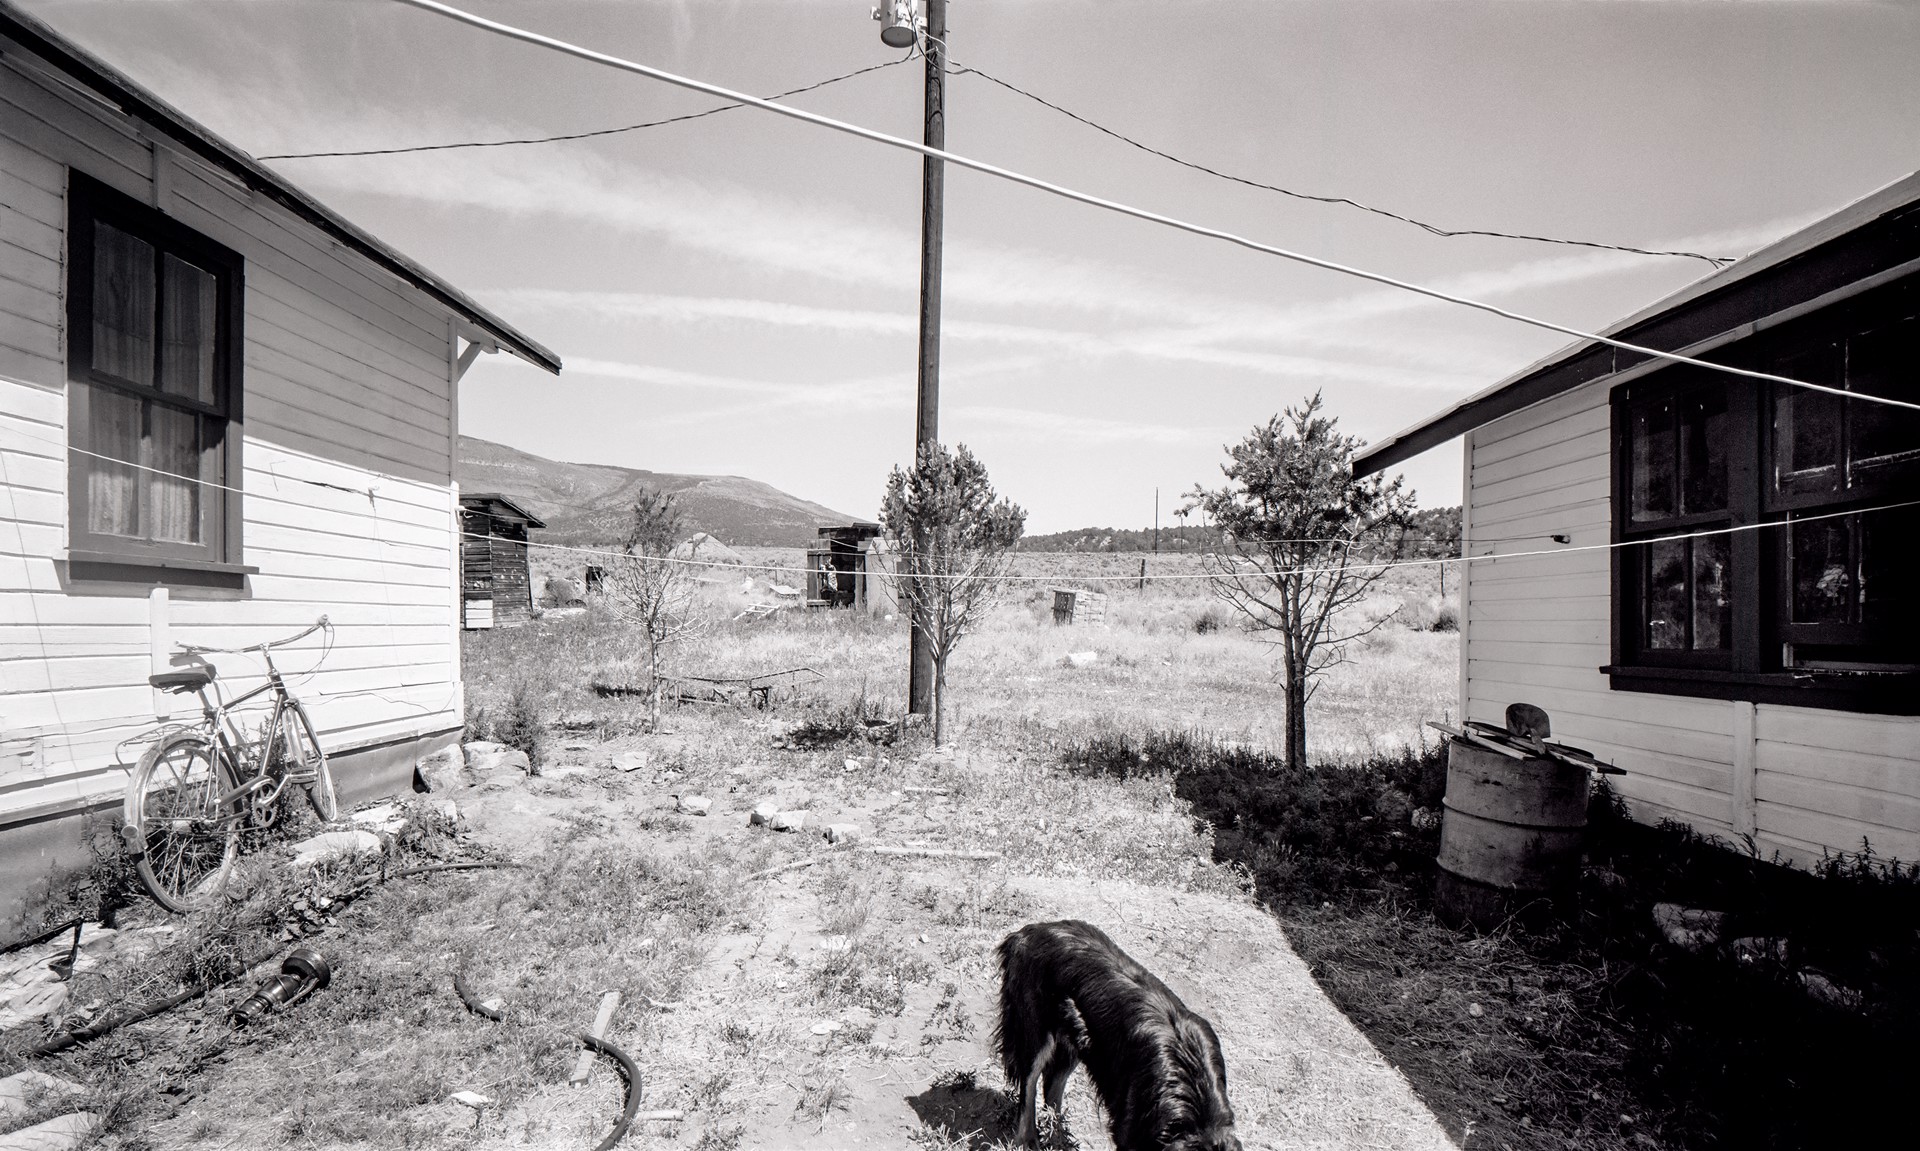 Kodak, Exploring His New Home, McCoy, Colorado by Lawrence McFarland